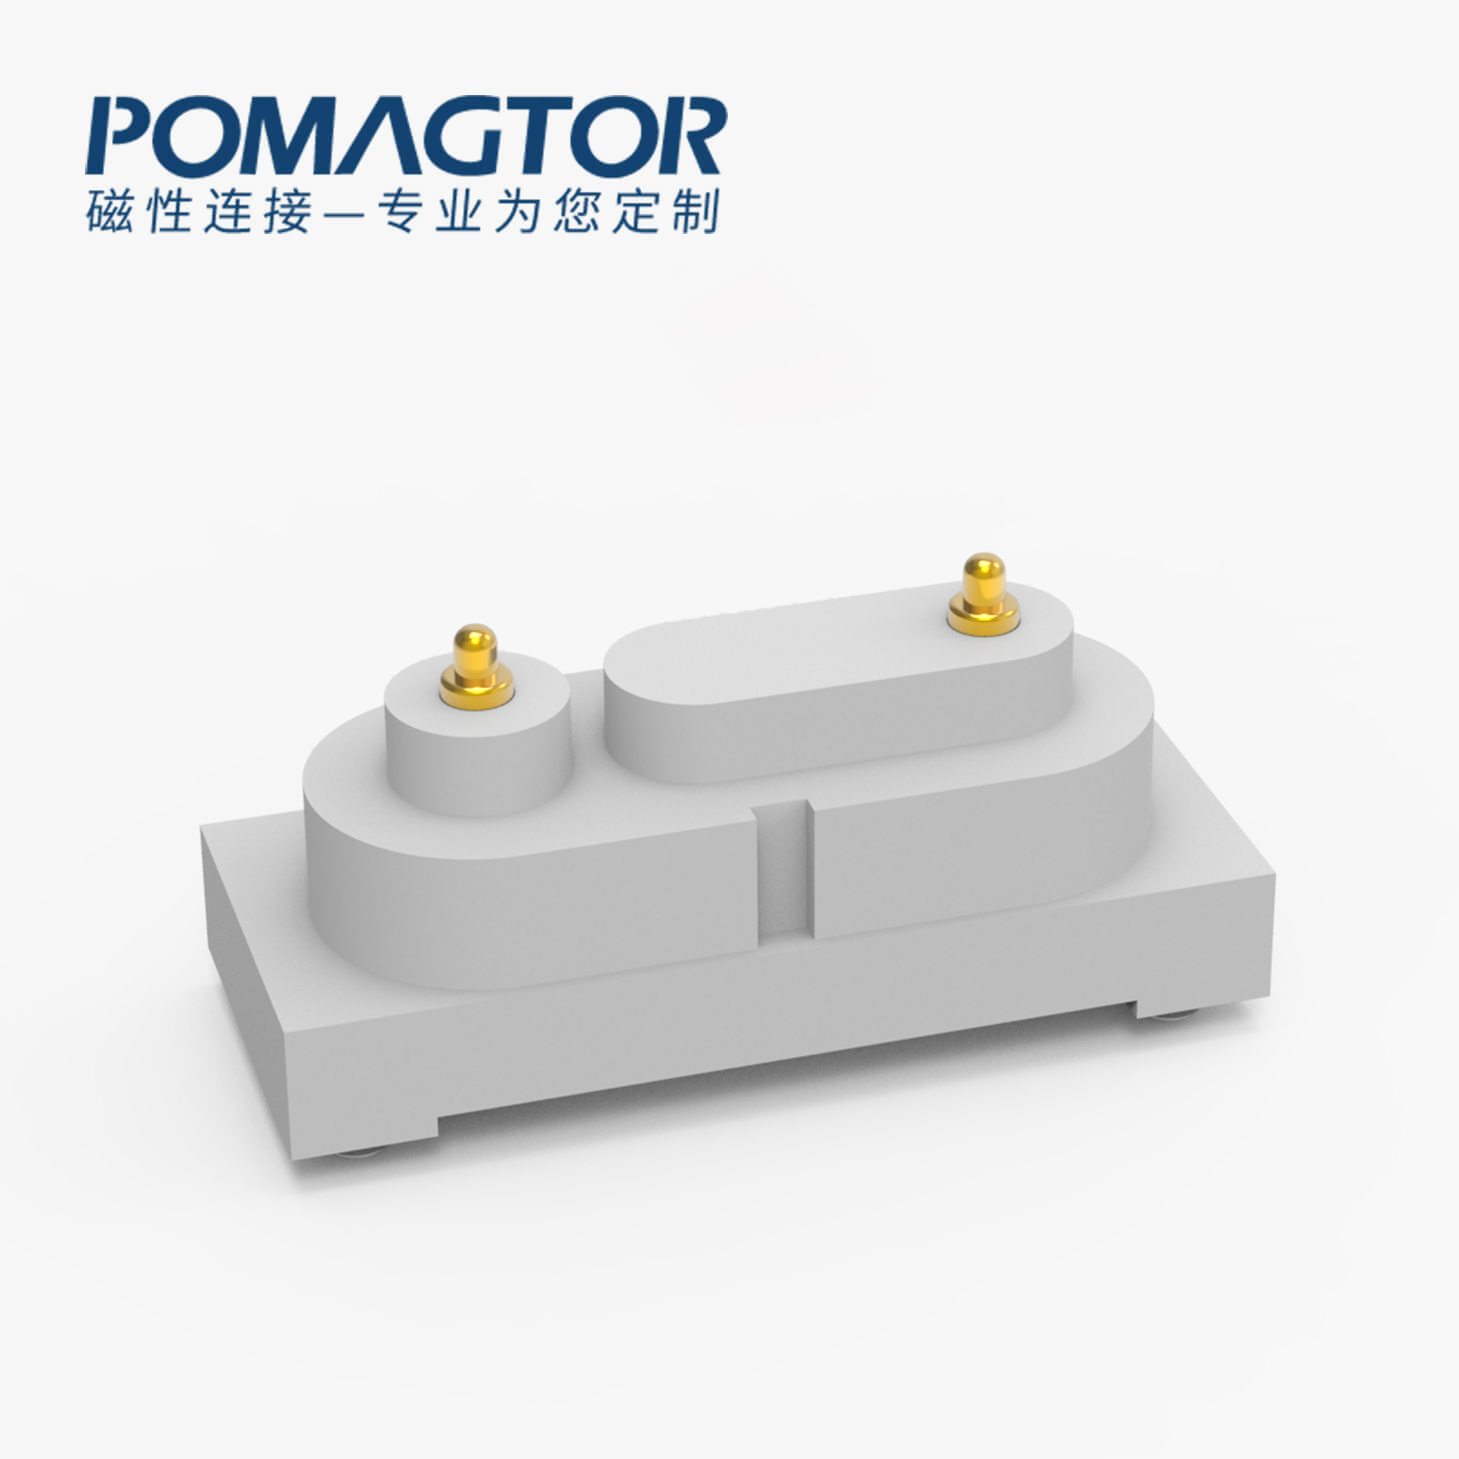 POGO PIN连接器 其他类：2PIN，电镀黄铜Au5u，电压5V，电流1A，工作行程0.5mm:80±15gf，弹力10000次+，工作温度-30°~85°